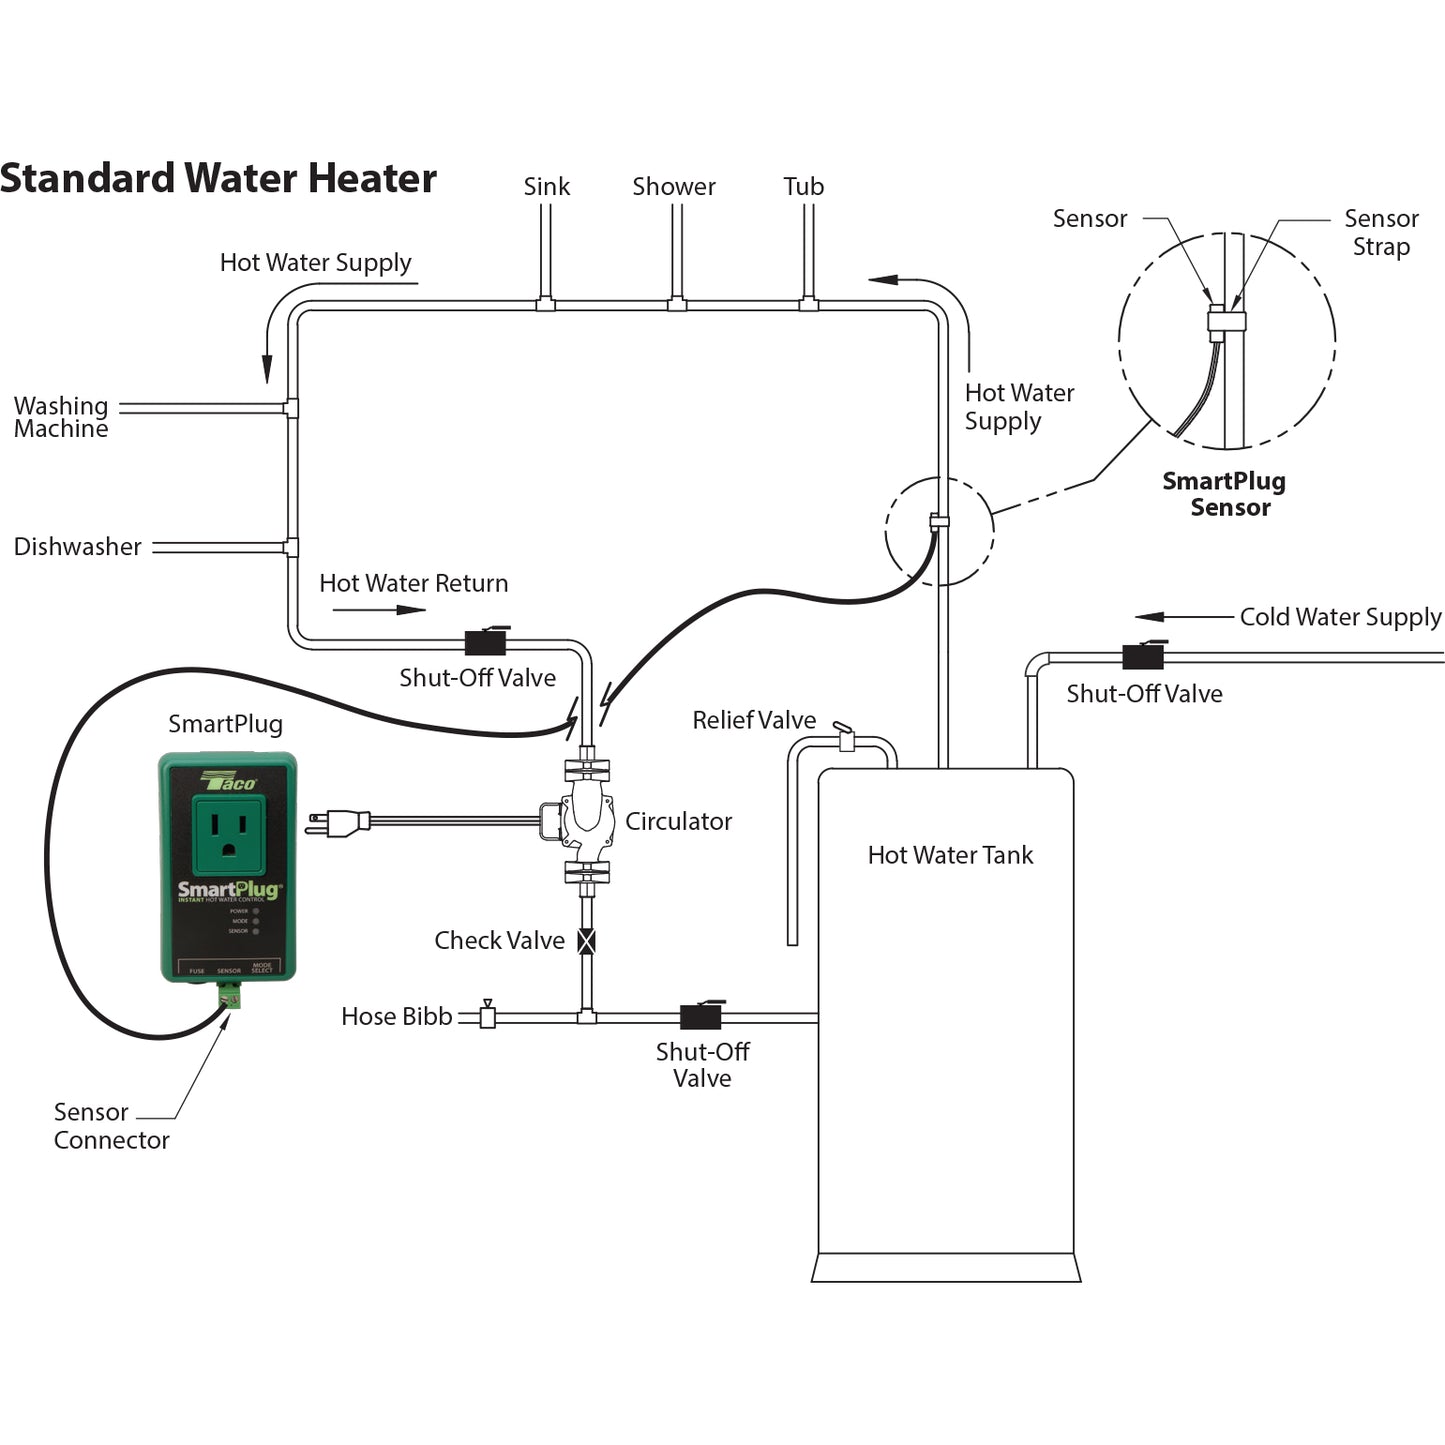 SP115-1 - SmartPlug Instant Hot Water Control